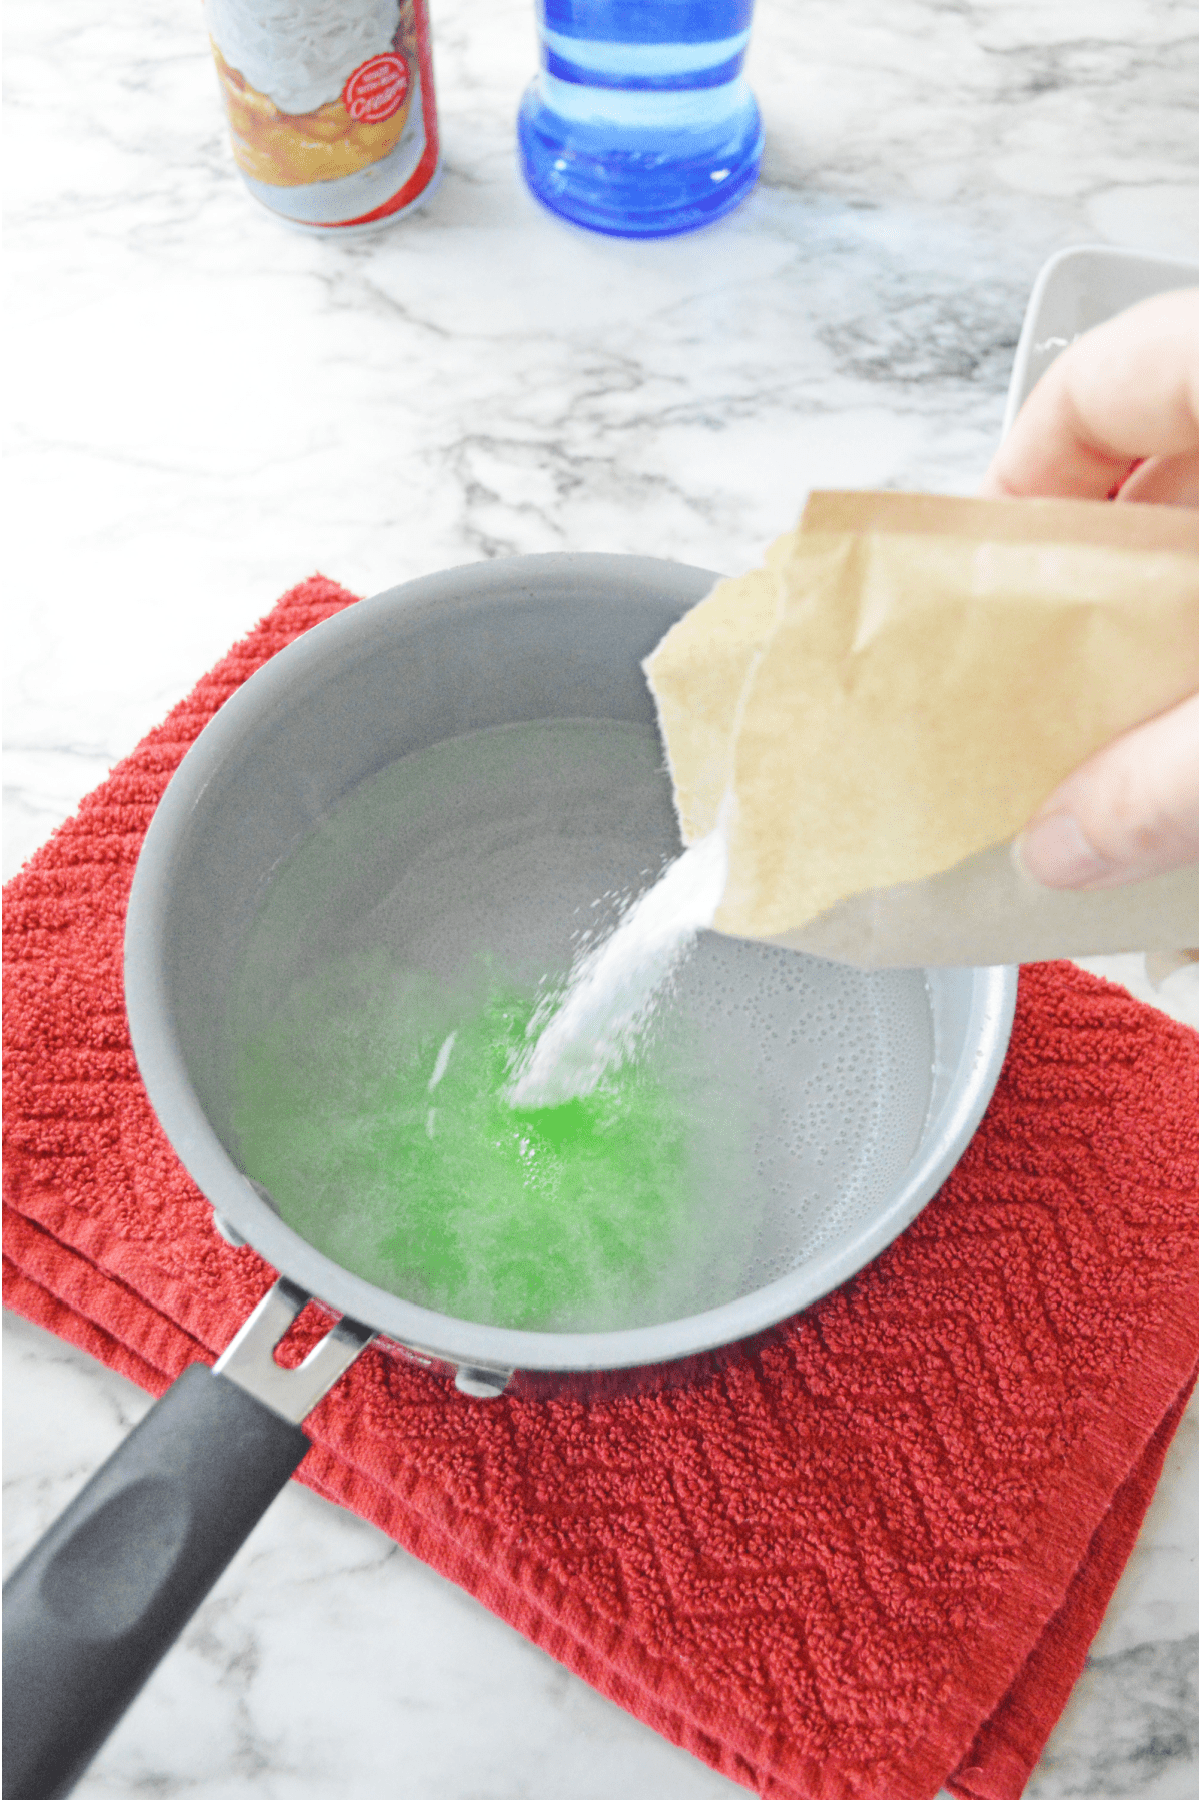 Pouring Jello powder into hot water